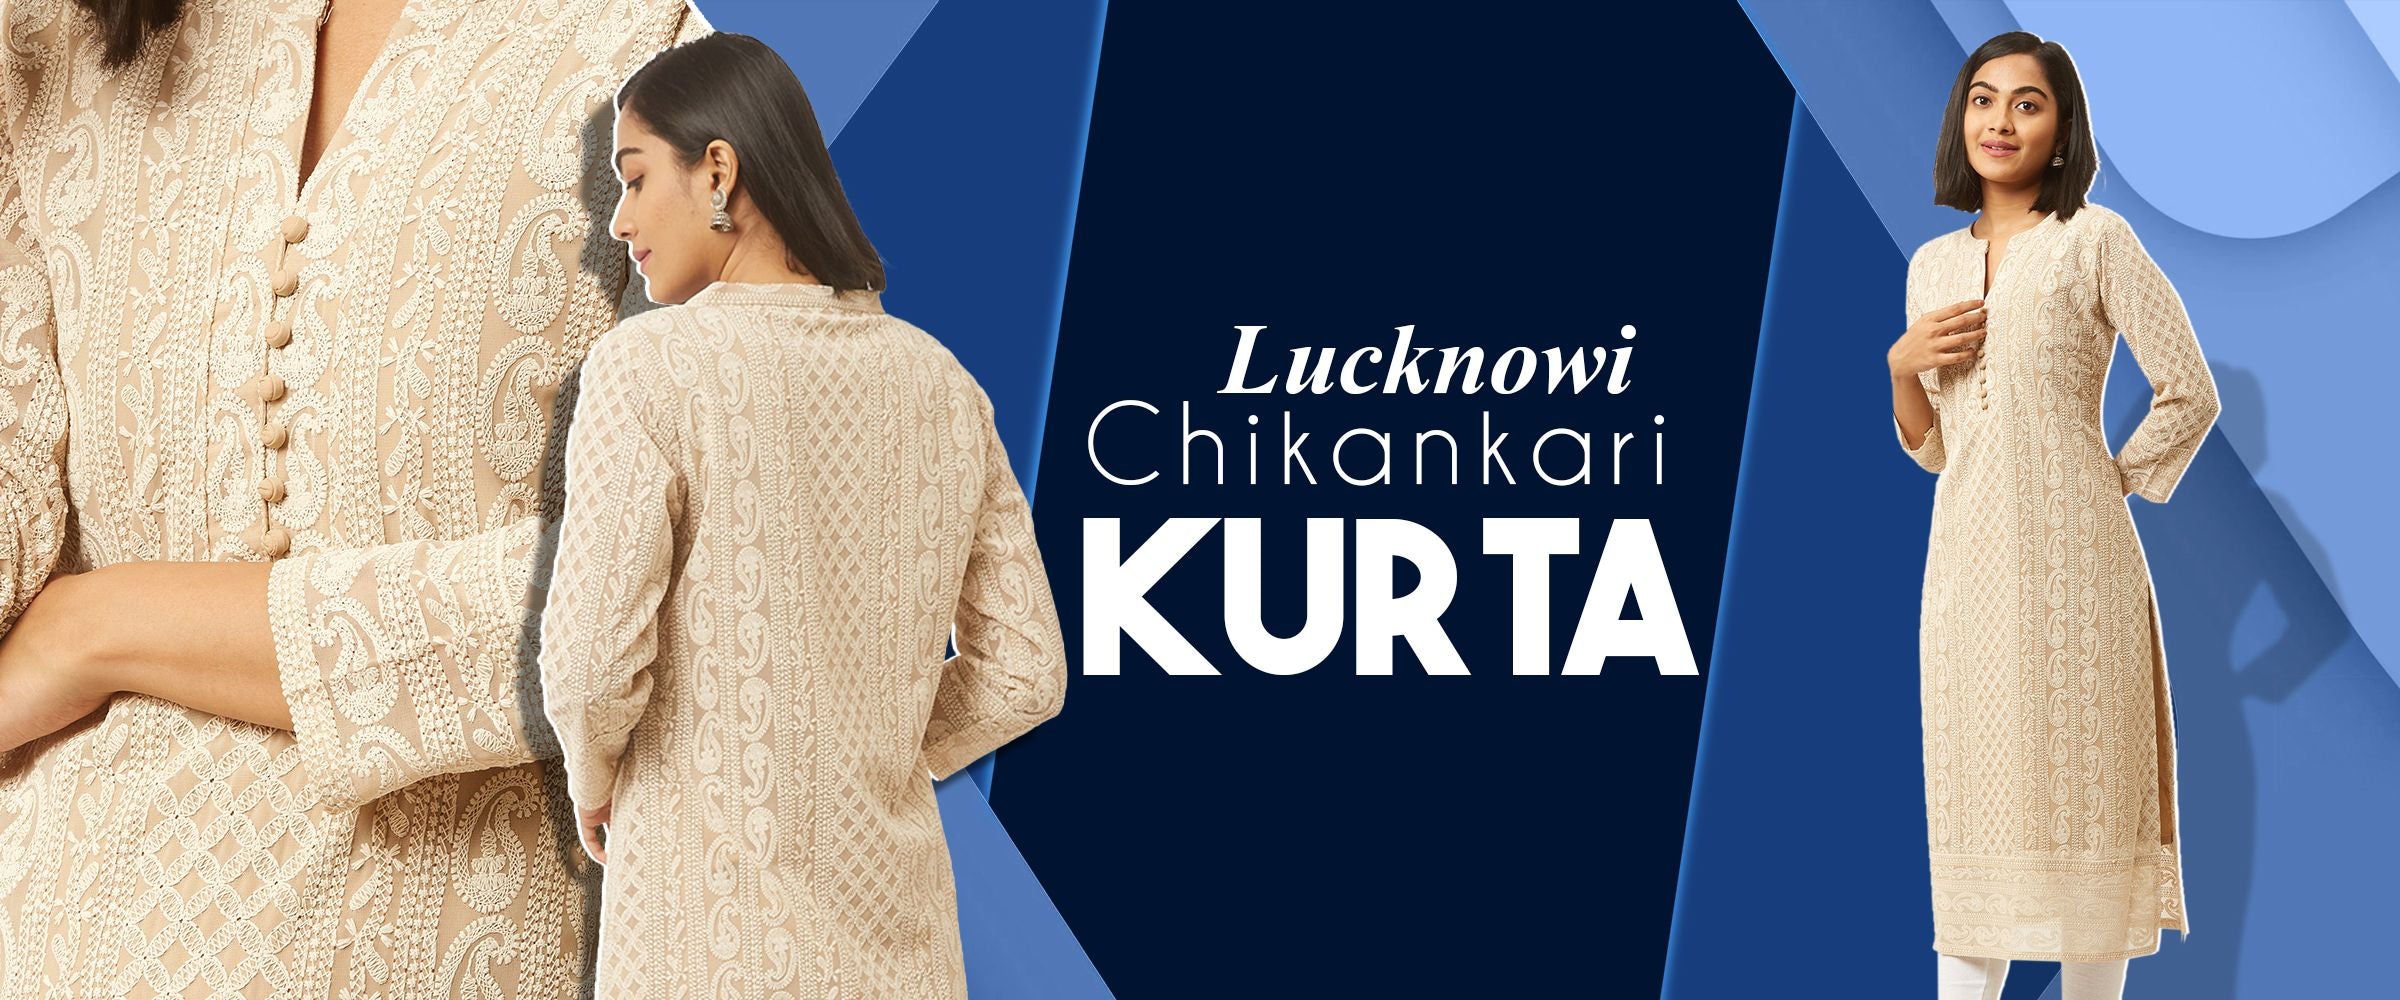 Chikankari Trends: A Closer Look at Women's Clothing Favorites